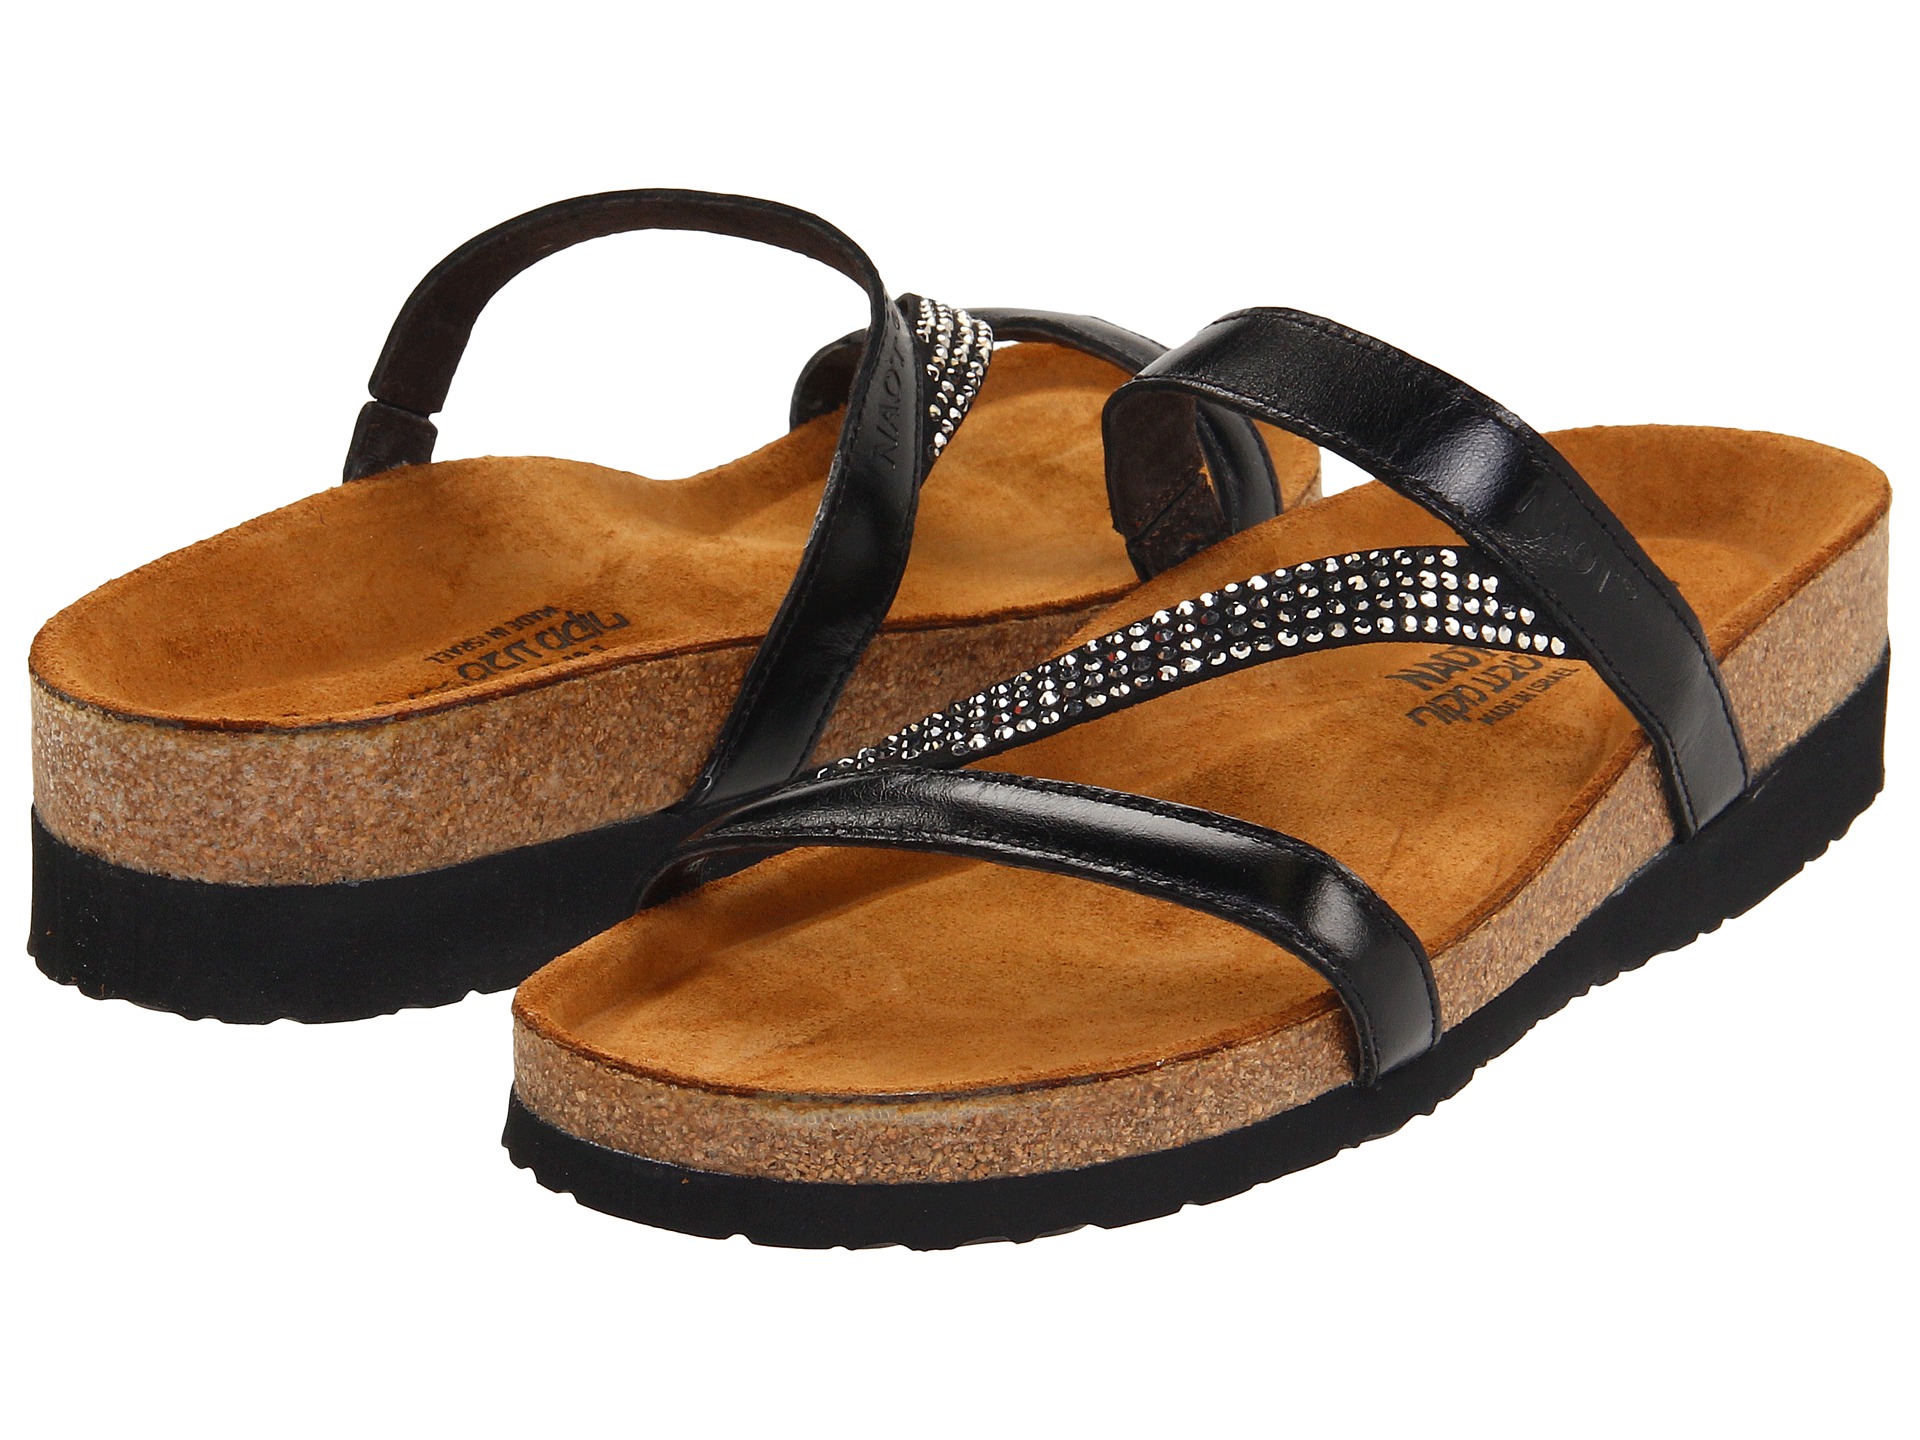 Naot Footwear Hawaii Black Madras Leather - Zappos.com Free Shipping ...